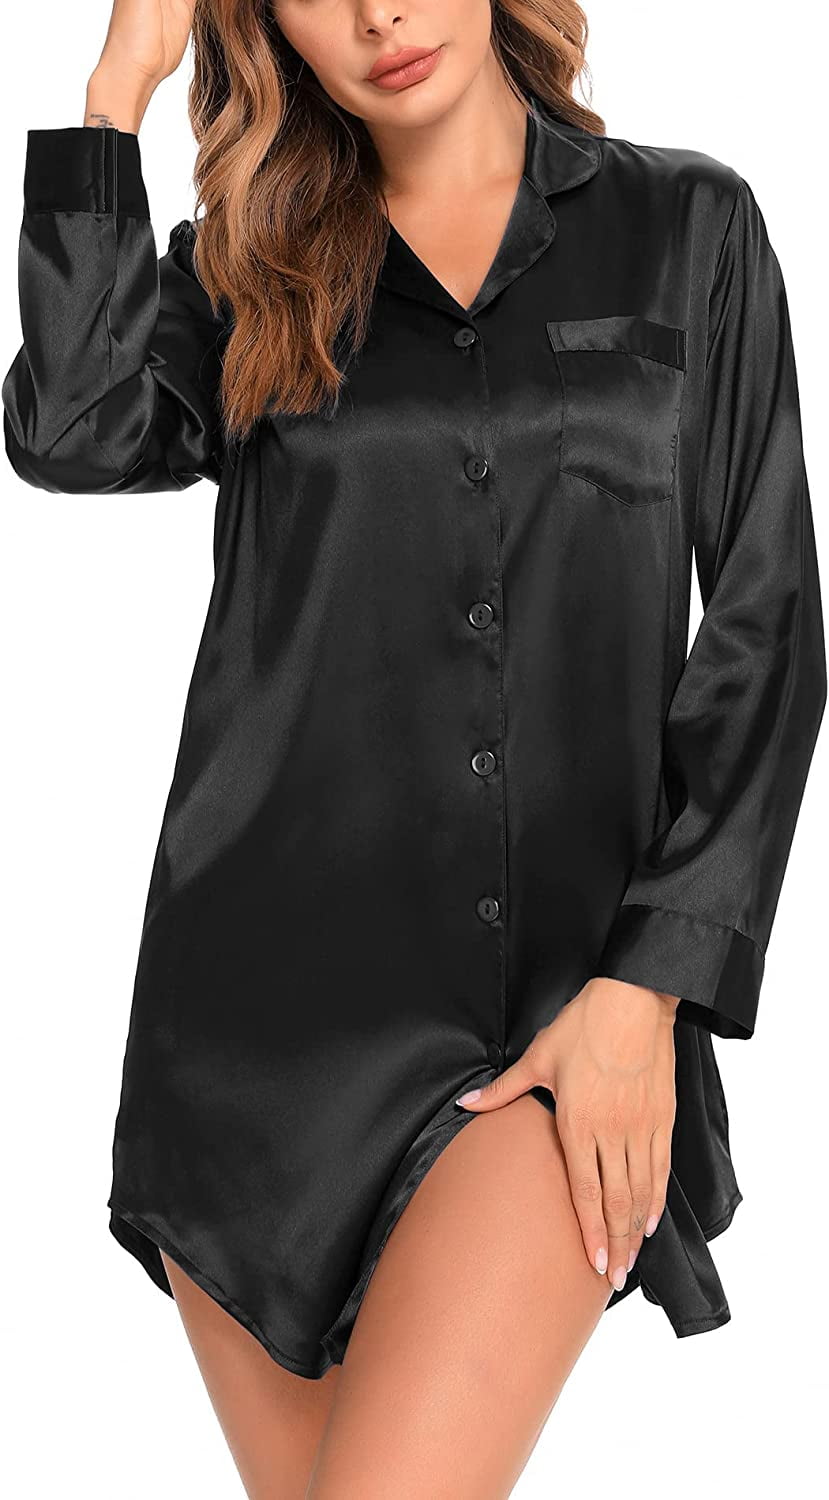  Womens Satin Sleep Shirt Long Sleeve Sleepwear Silk  Nightshirt Button Down Pajama Top Black